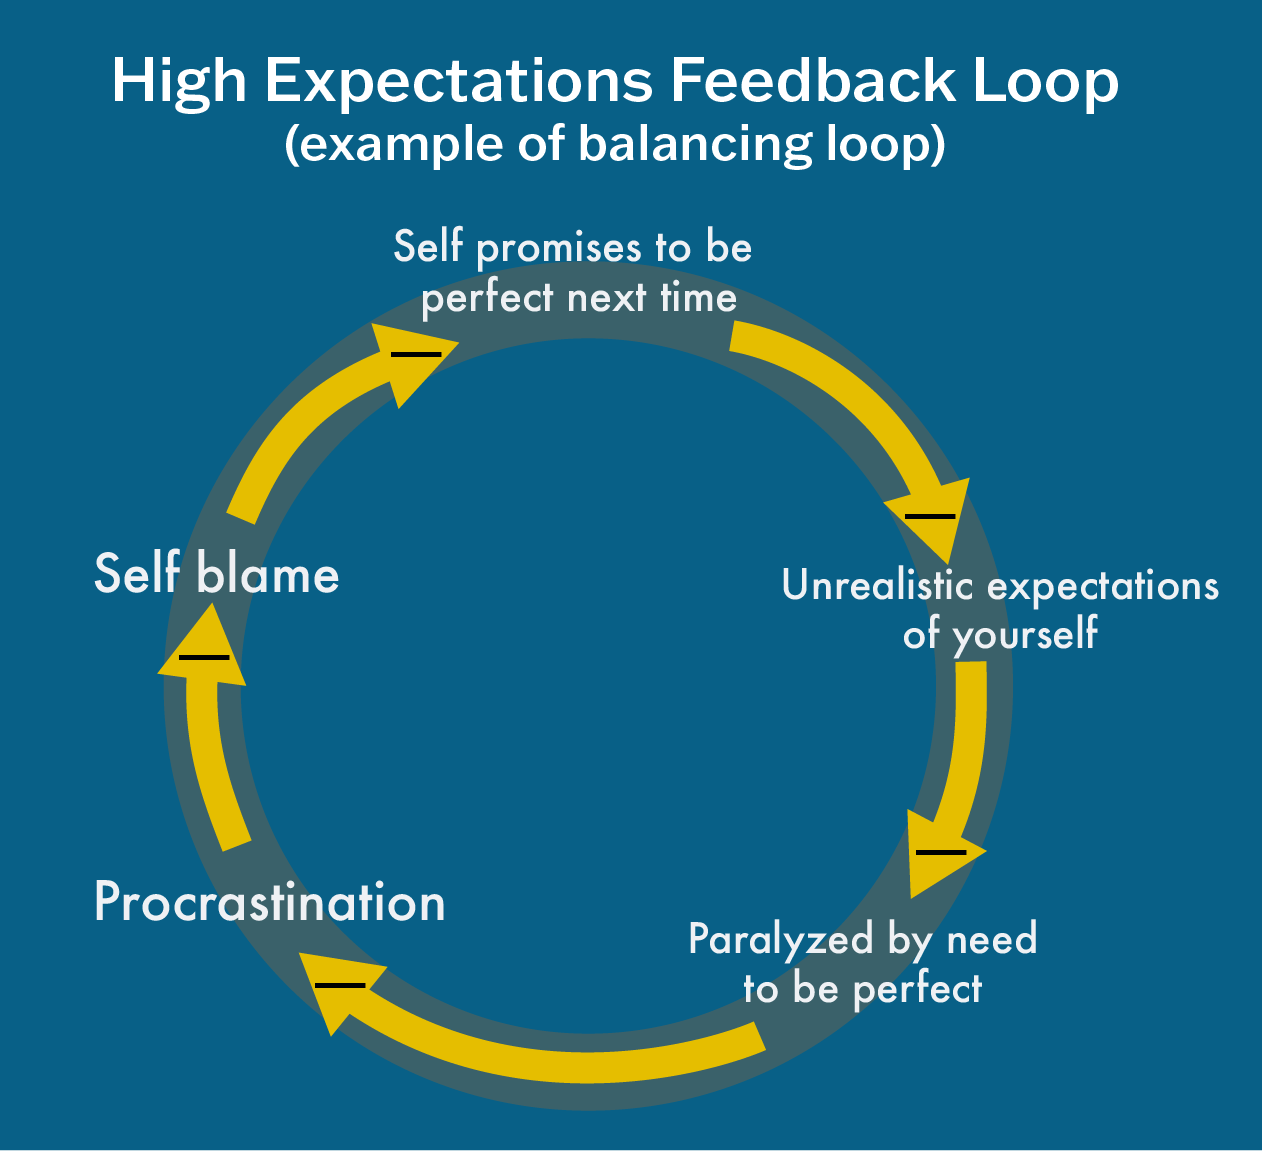 infographic demonstrating a balancing feedback loop